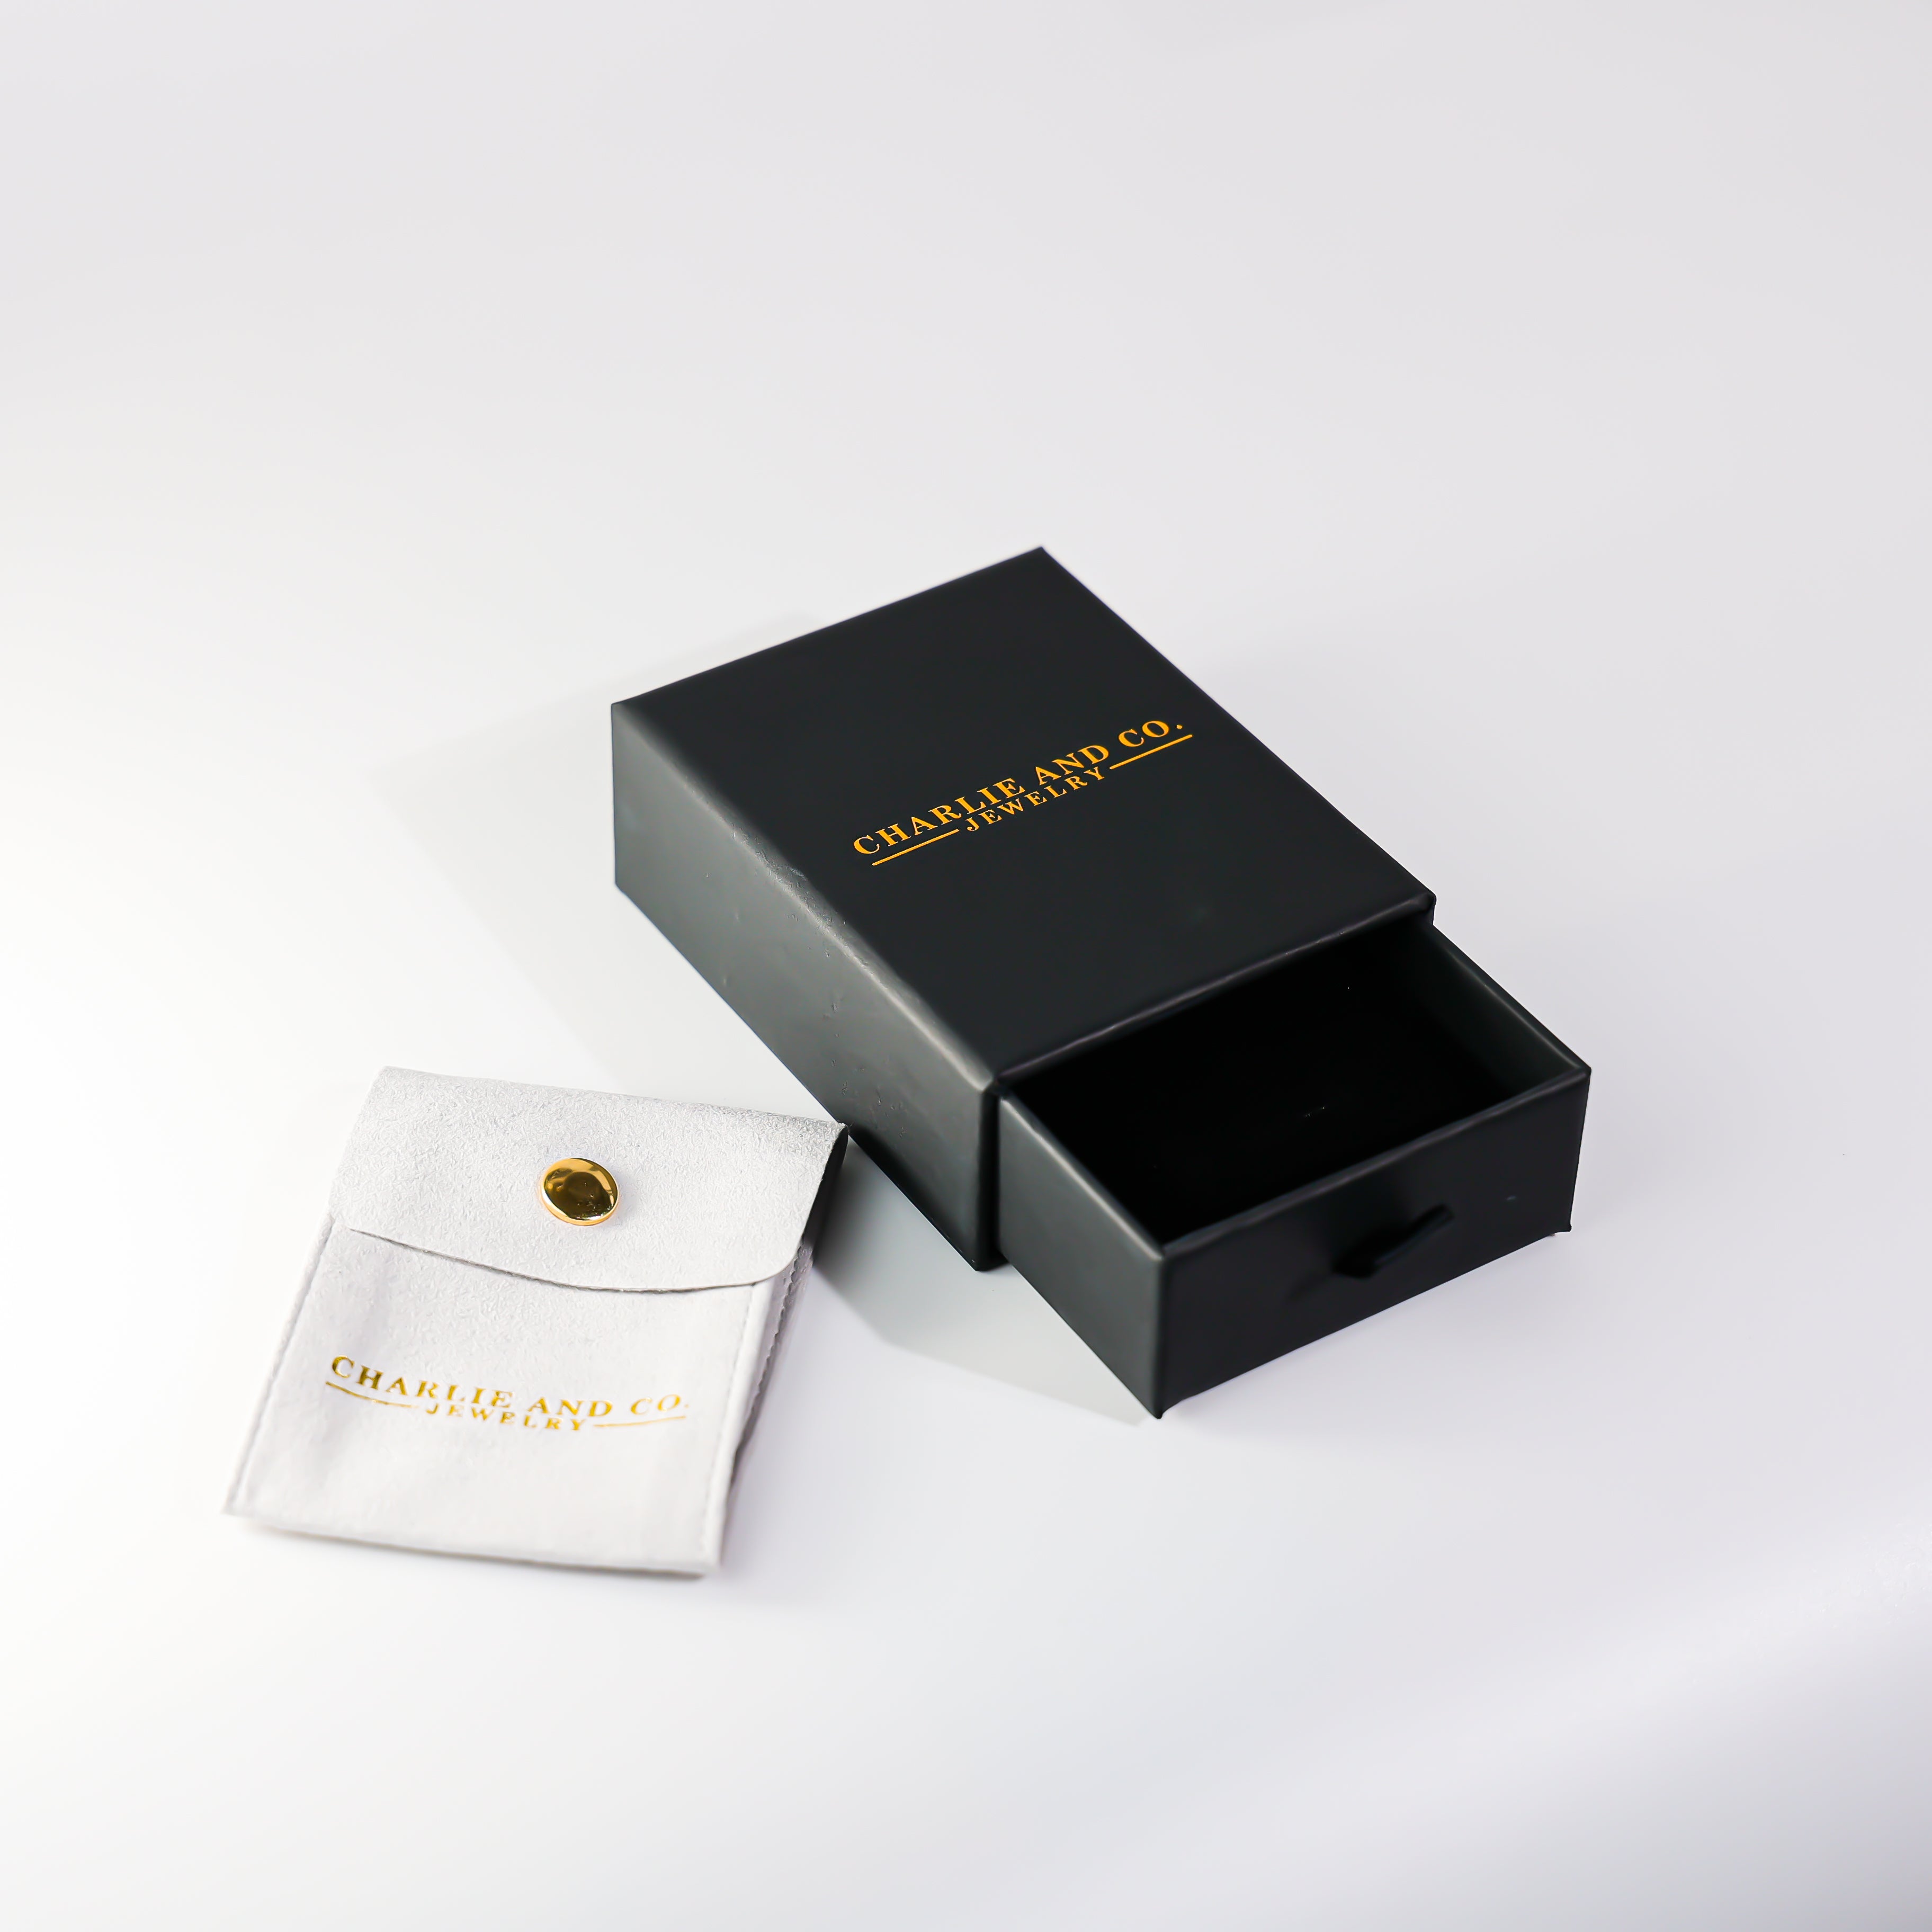 14K Gold Diamond-Cut Horse Pendant - Charlie & Co. Jewelry